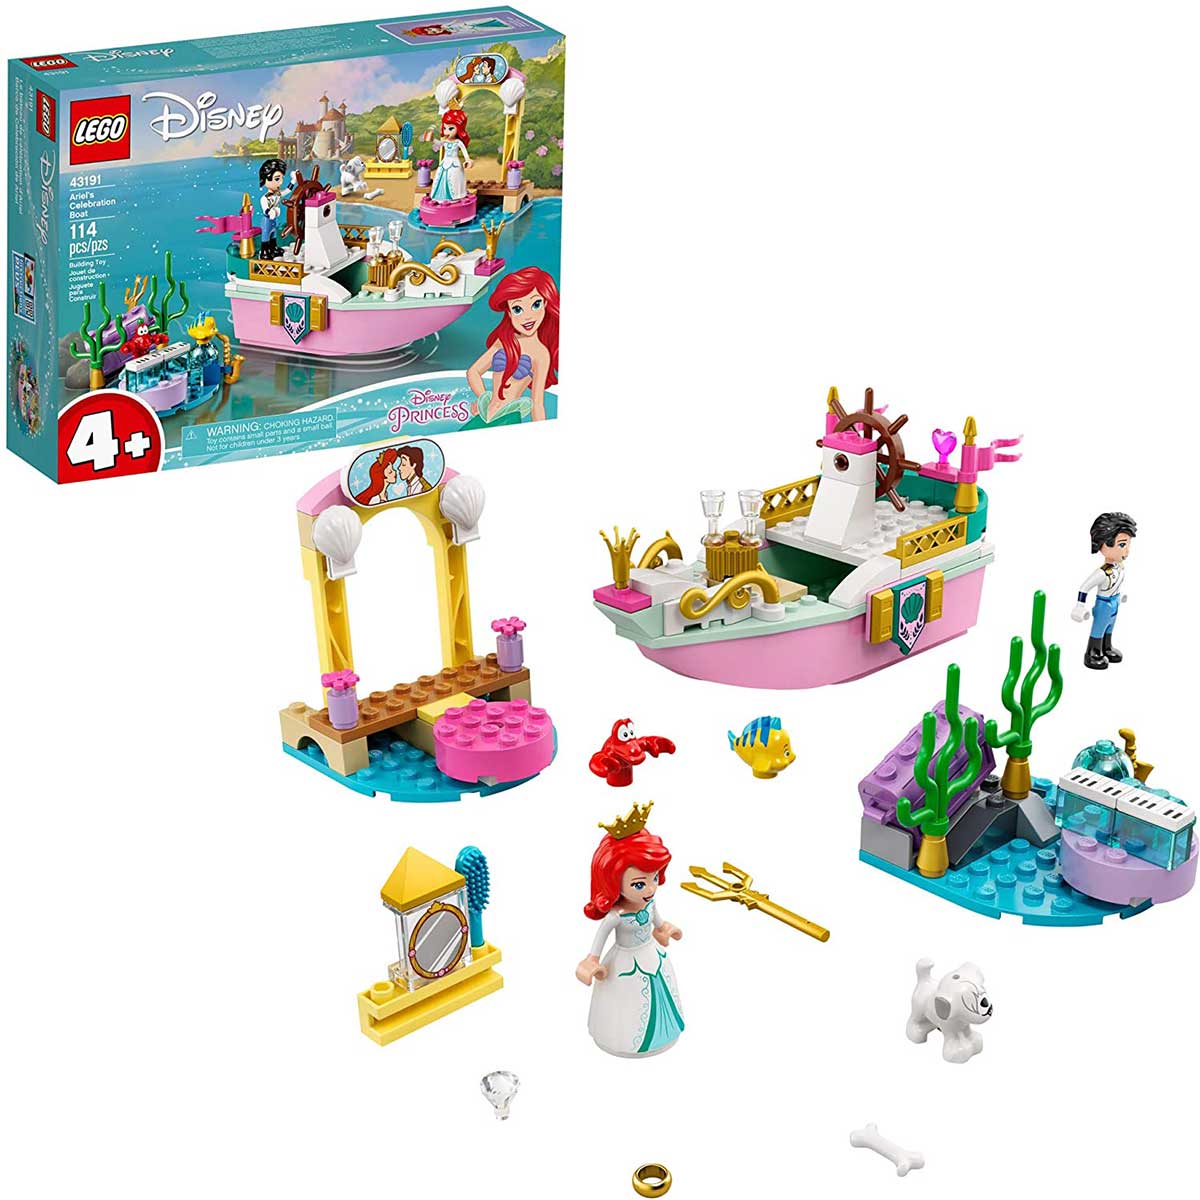 LEGO Disney - Ariel's Celebration Boat 43191